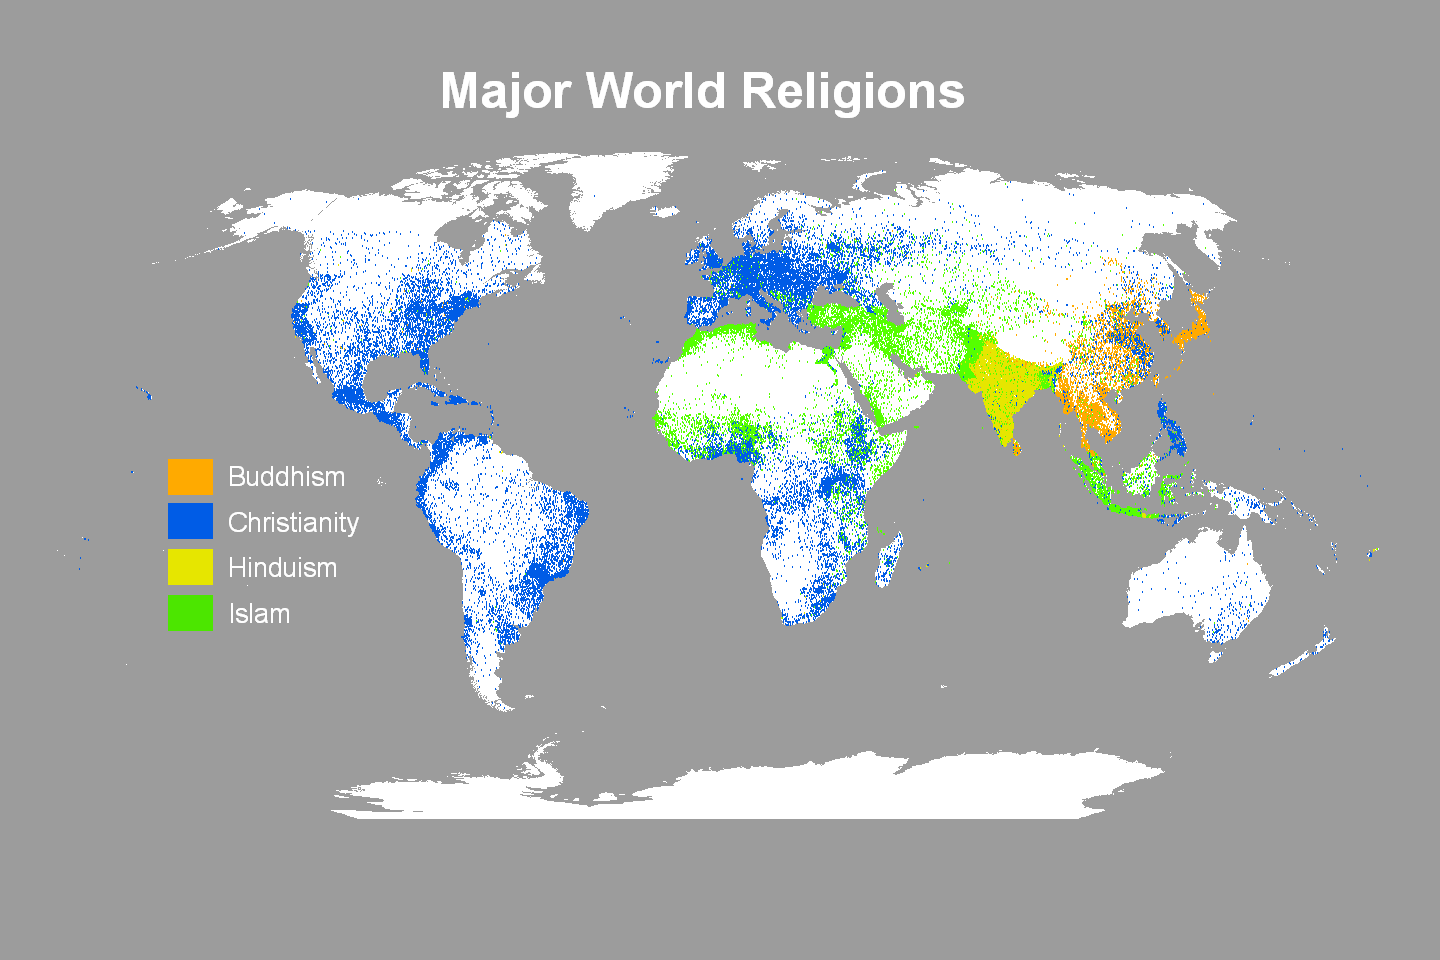 Major World Religions